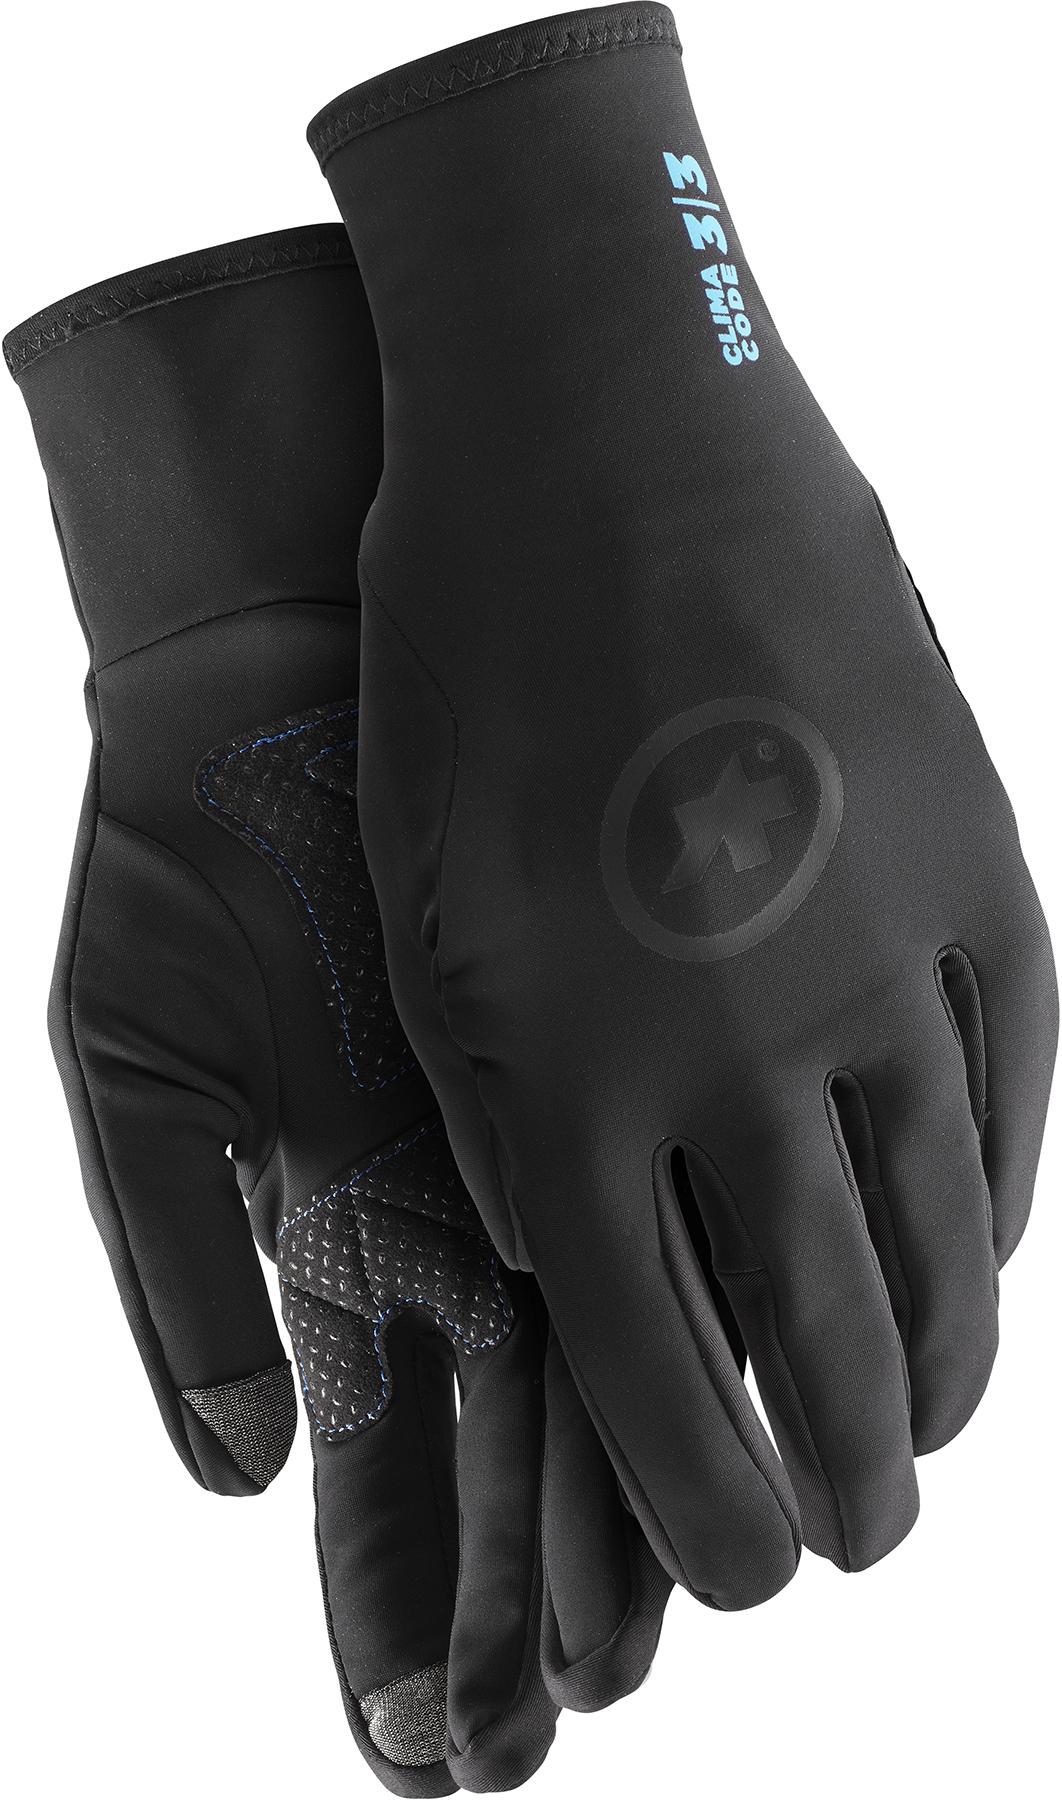 Assos Winter Gloves Evo - Black Series